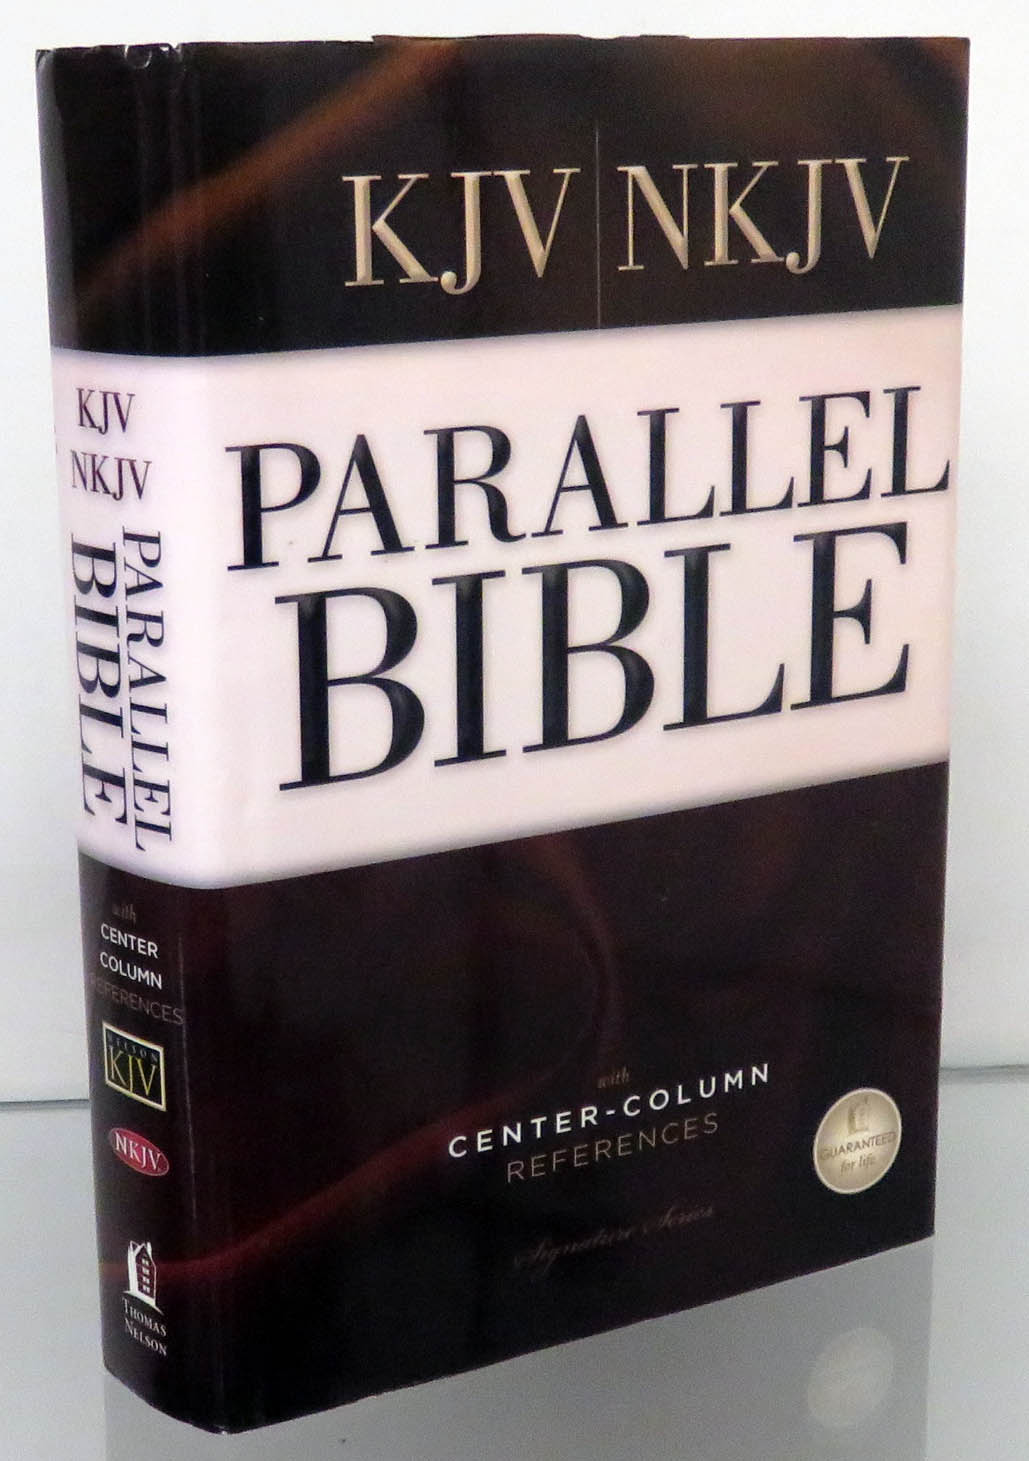 KJV NKJV Parallel Bible 